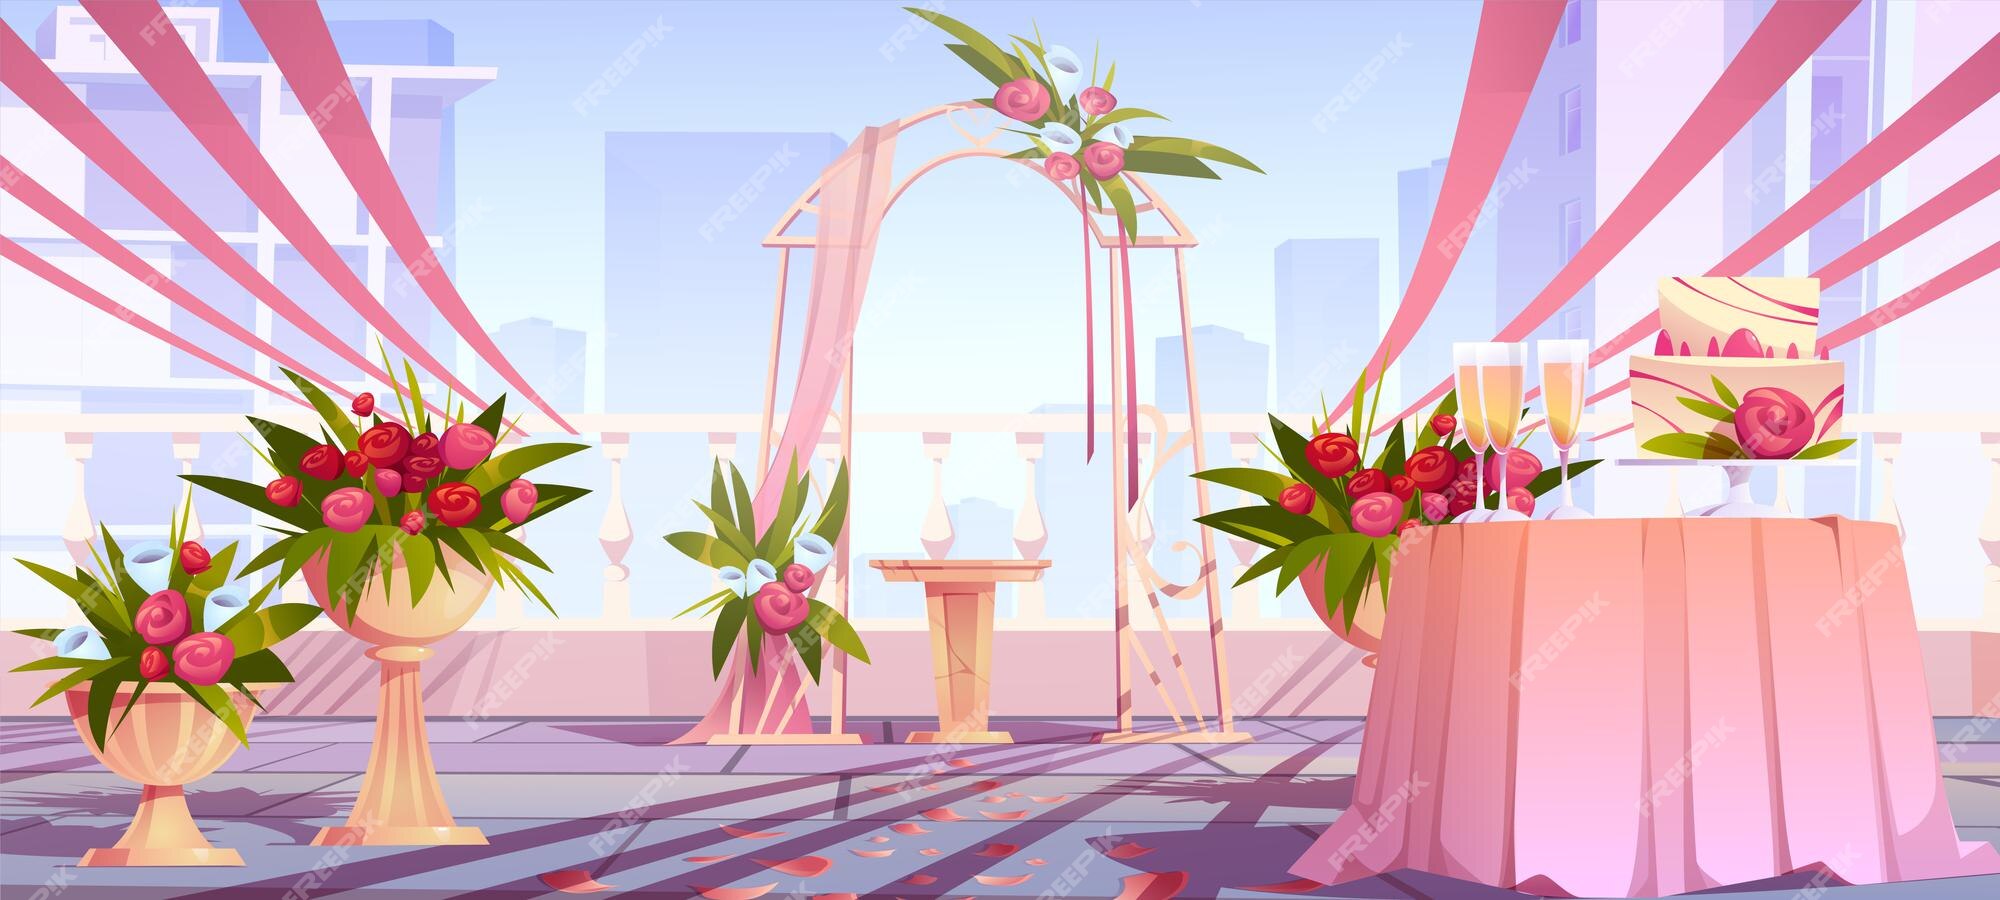 Wedding scene Vectors & Illustrations for Free Download | Freepik